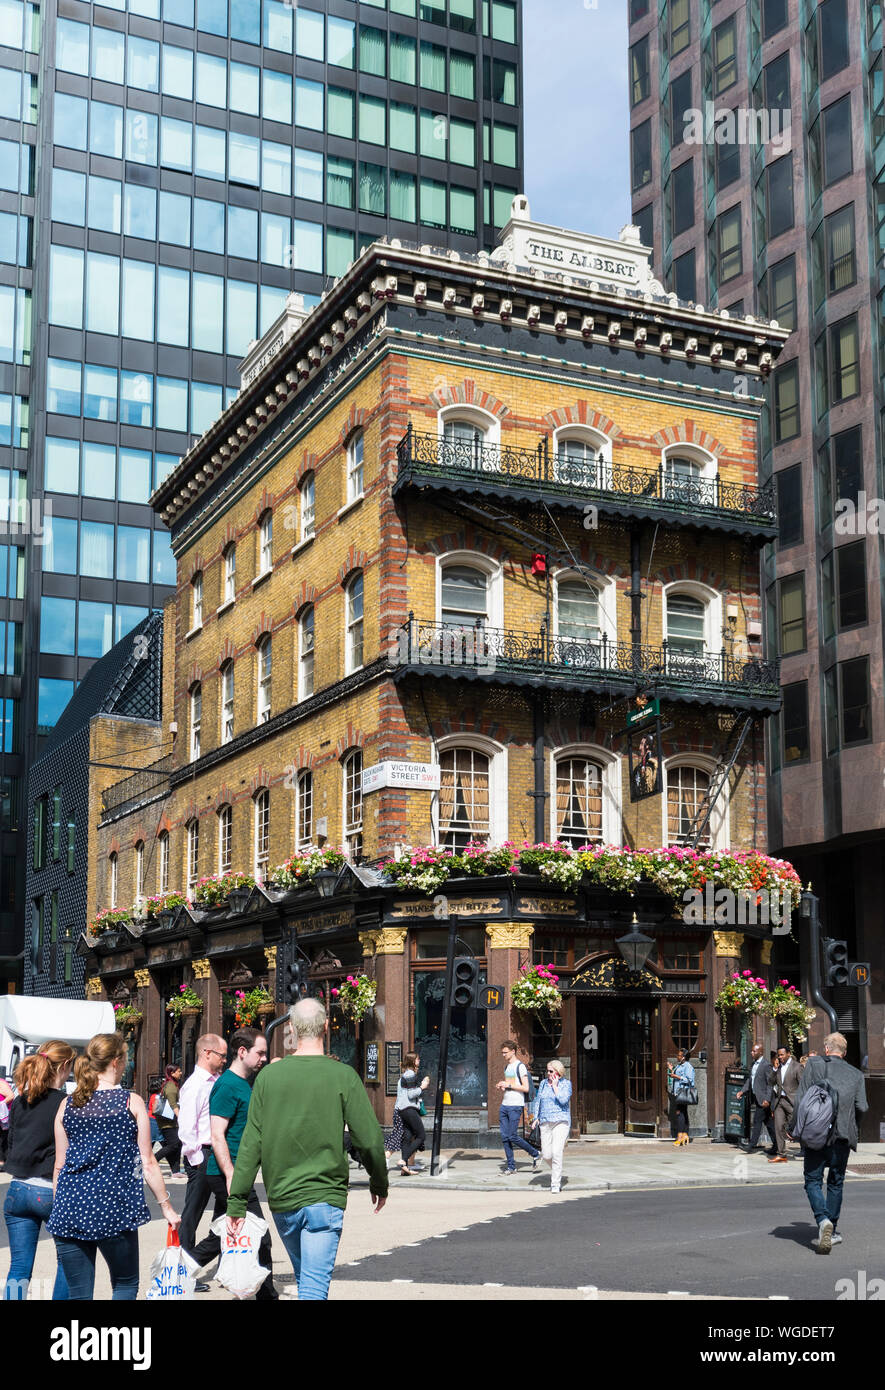 Die Albert Pub (Public House) in der Victoria Street, Westminster, London, England, UK. London Pubs. Stockfoto